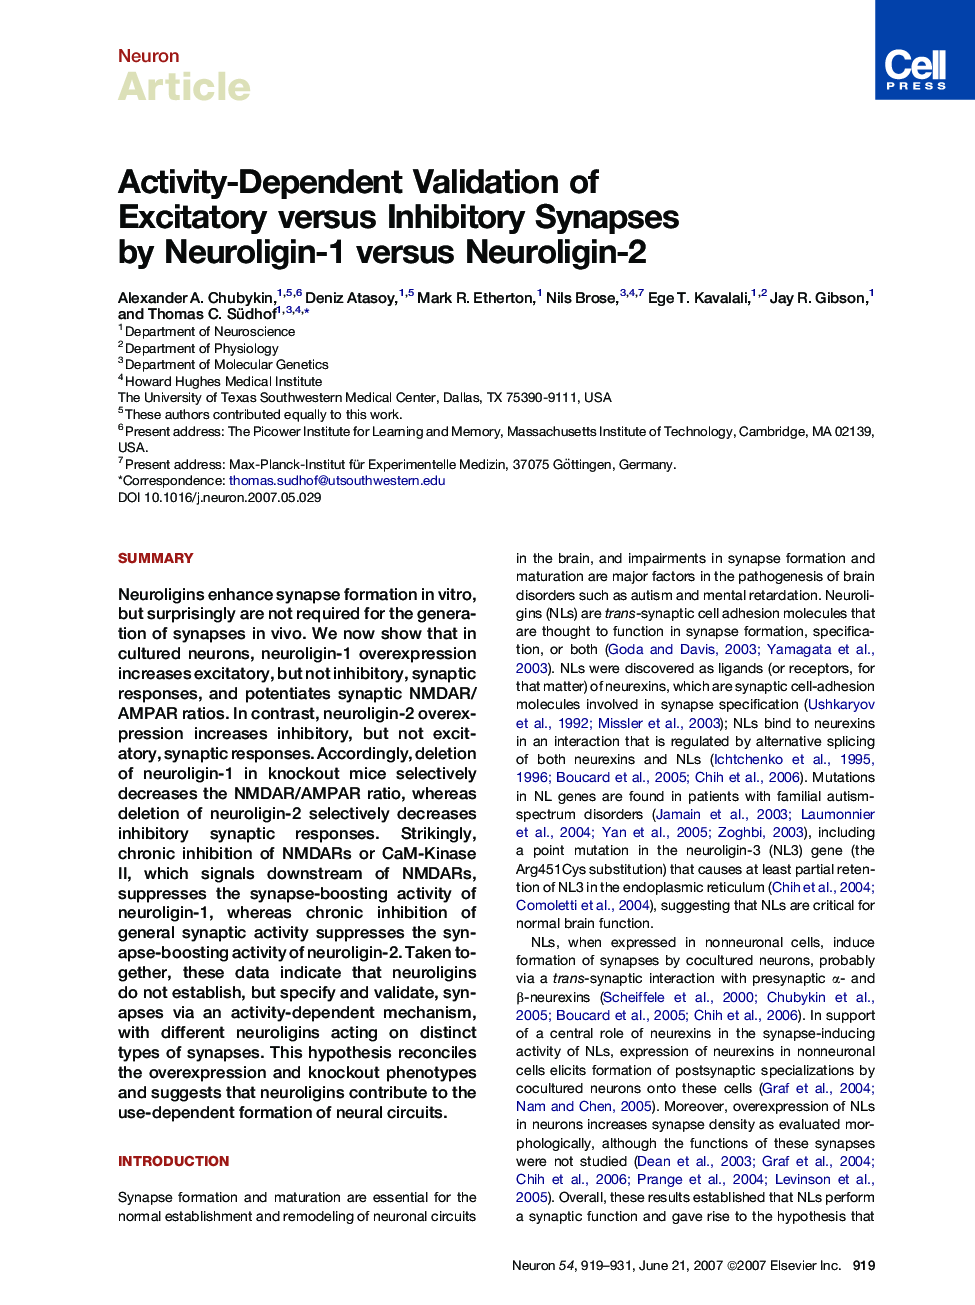 Activity-Dependent Validation of Excitatory versus Inhibitory Synapses by Neuroligin-1 versus Neuroligin-2